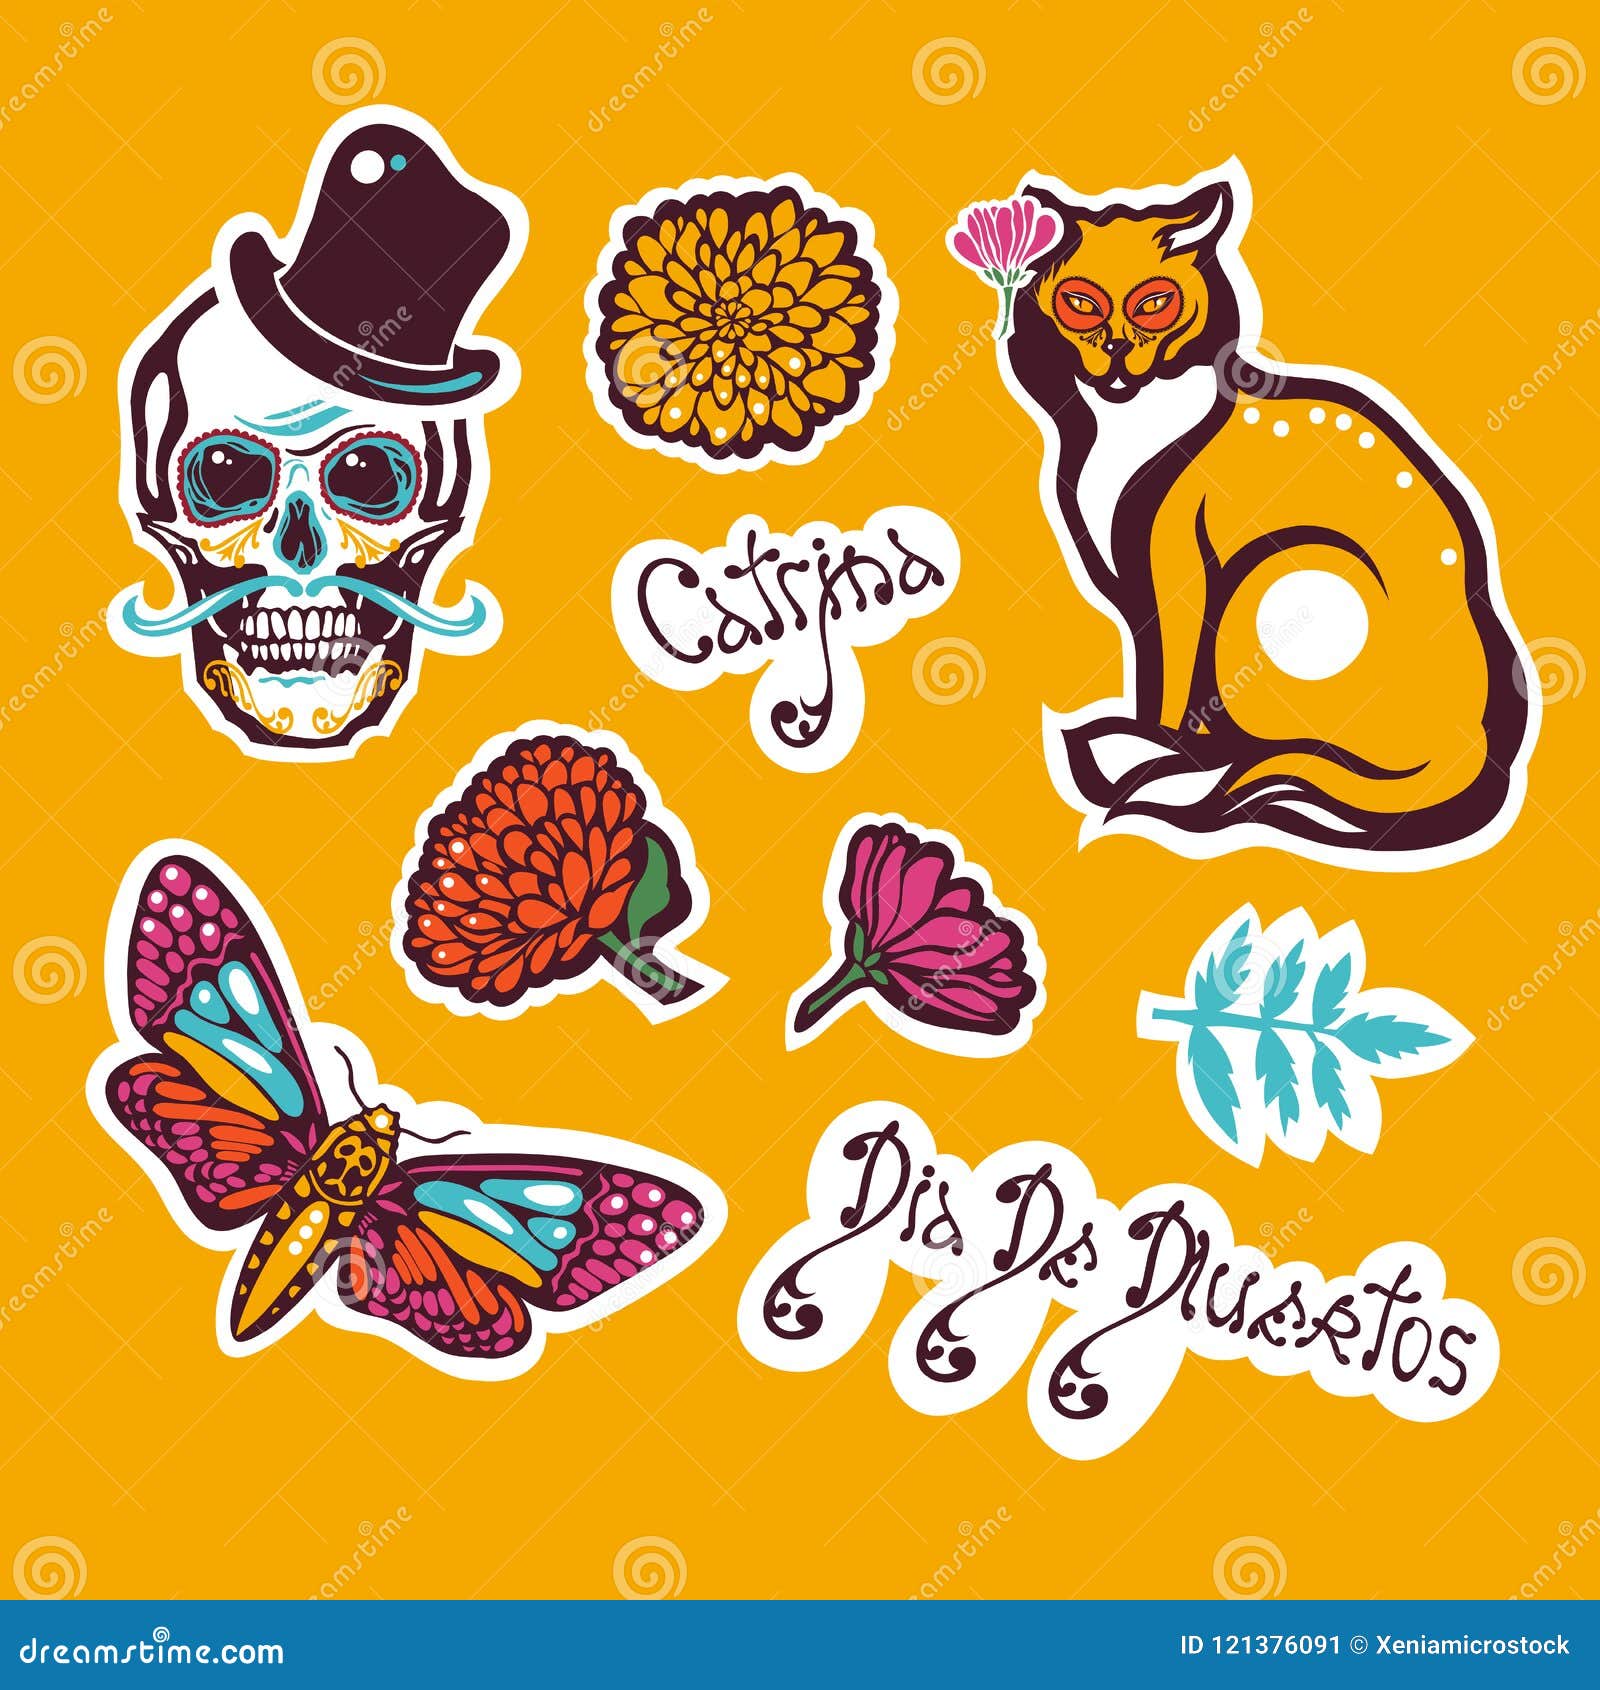 Sugar Skull Dia De Los Muertos black flower custom tag for pets by ID4PET 